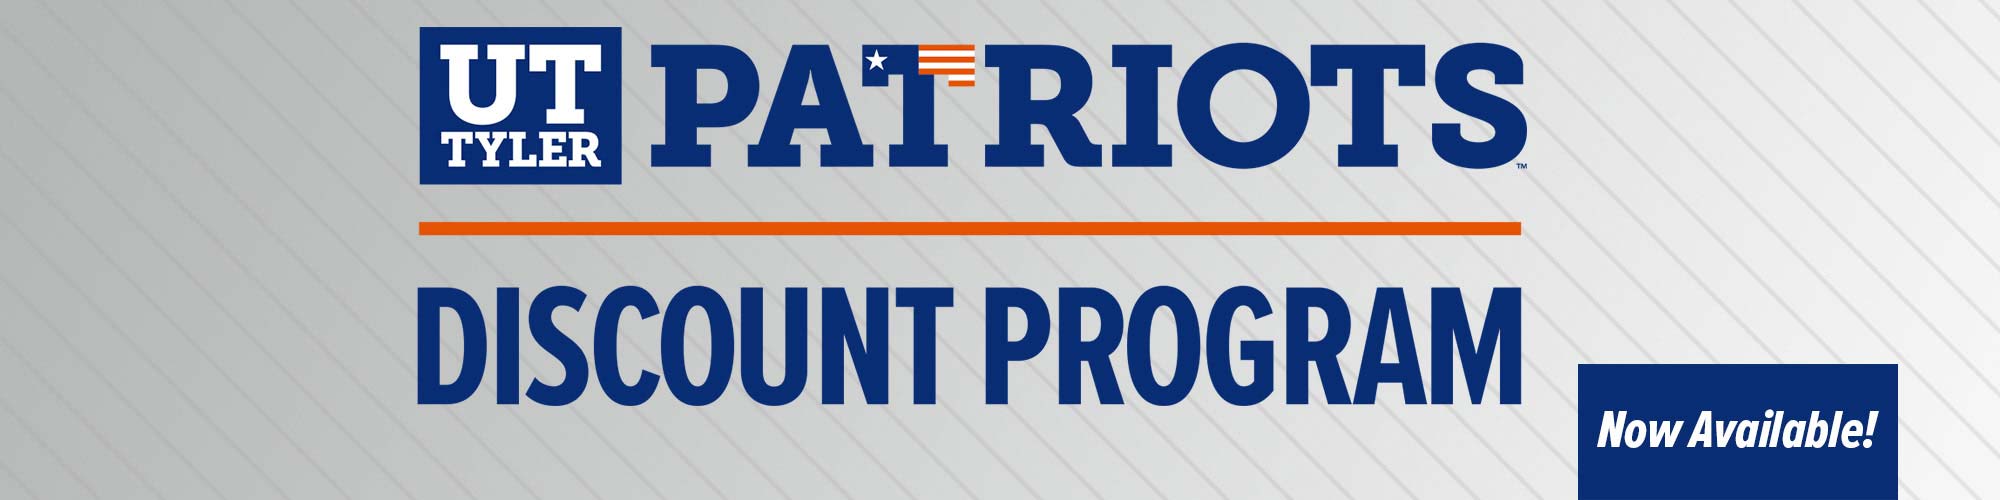 Patriots Discount Program - Now Available!